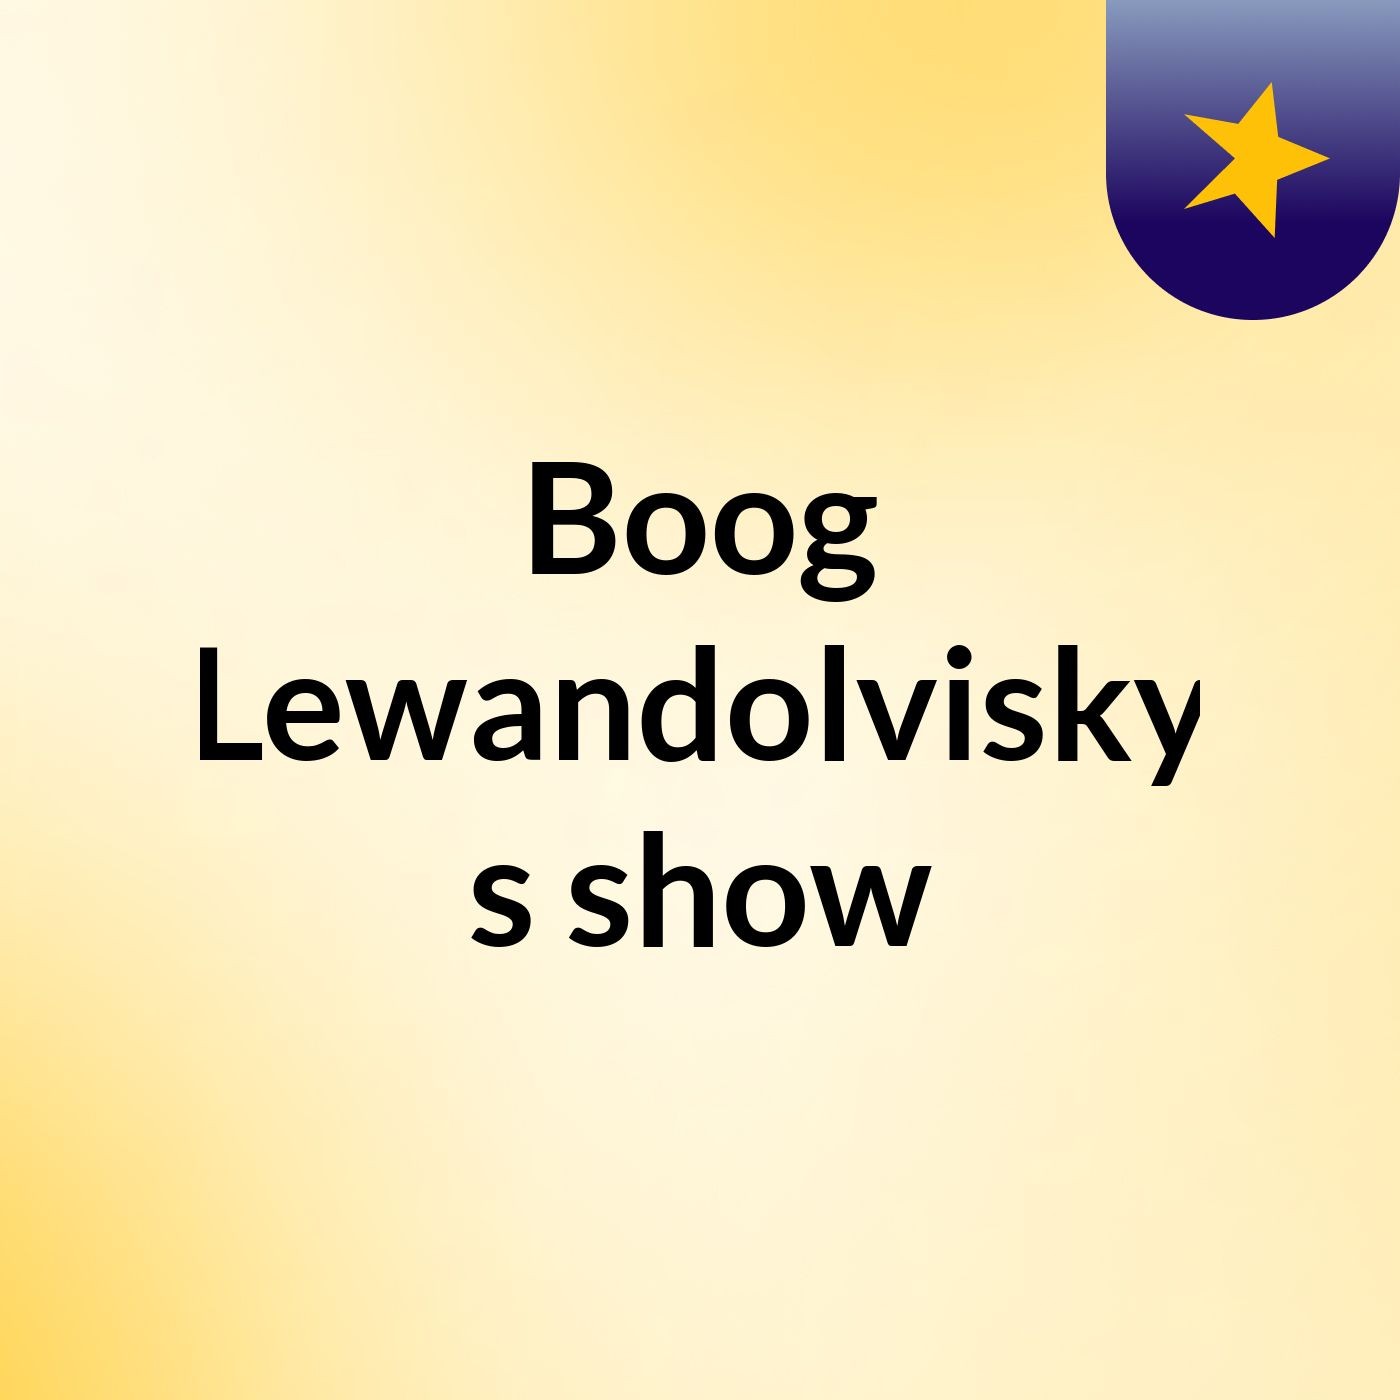 Boog Lewandolvisky's show